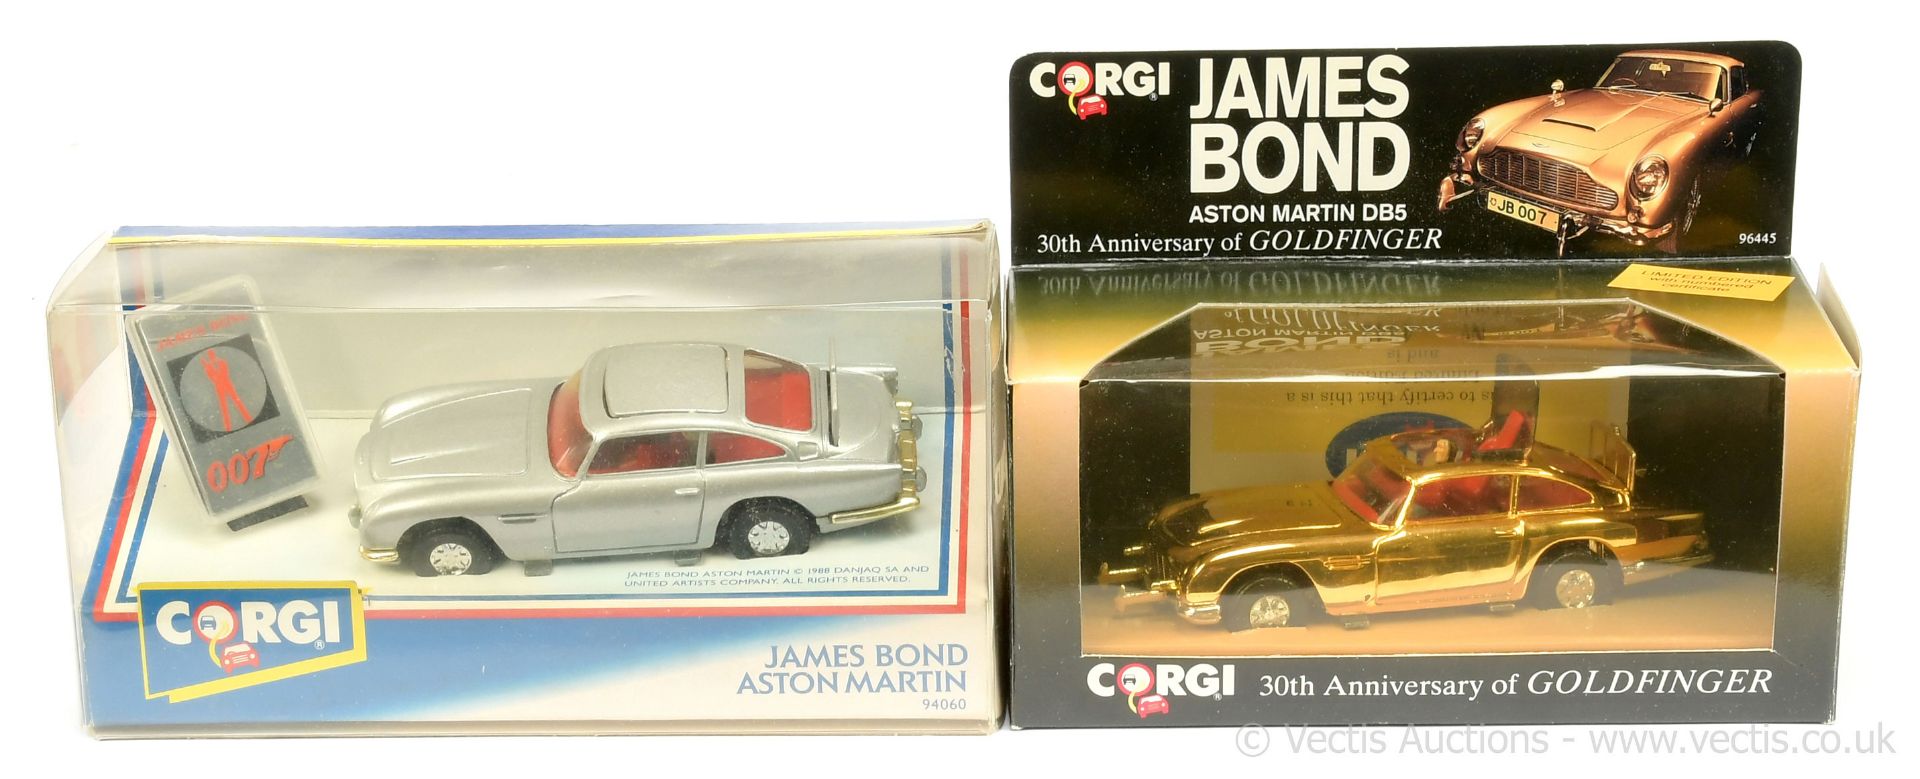 PAIR inc Corgi 94060 "James Bond" Aston Martin